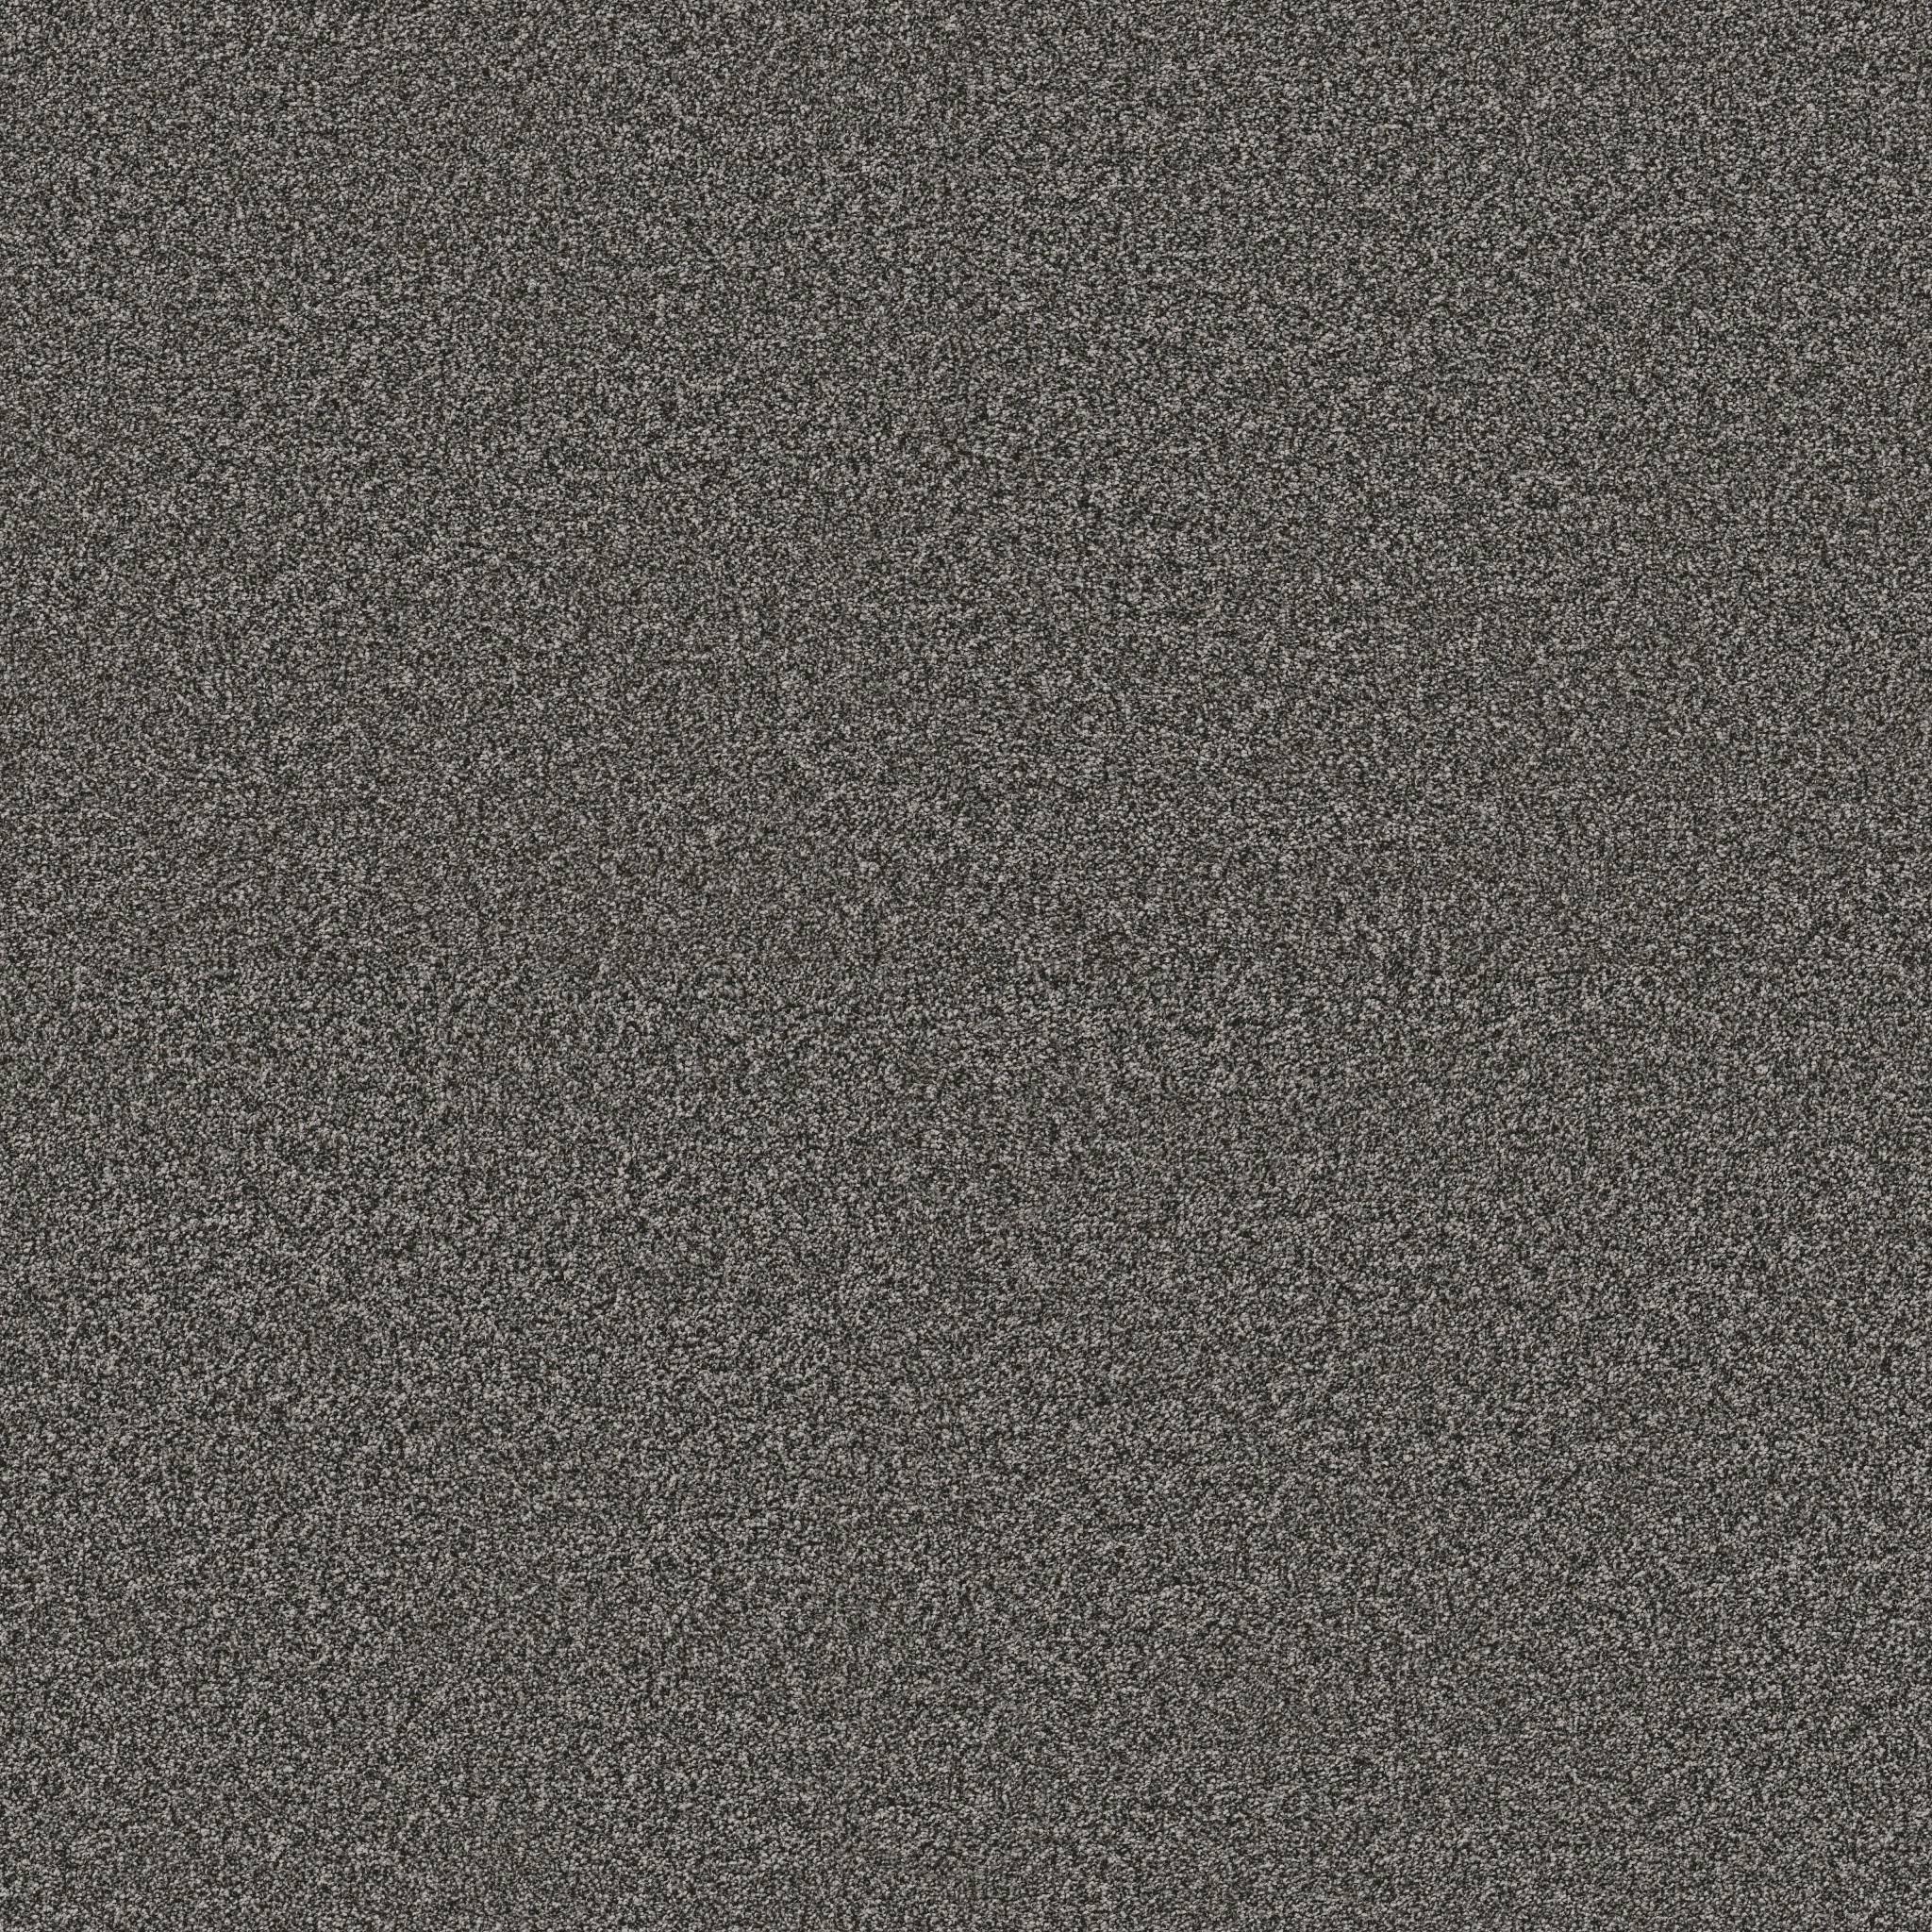 Kaleidoscope Carpet - Moon Rock Zoomed Swatch Image